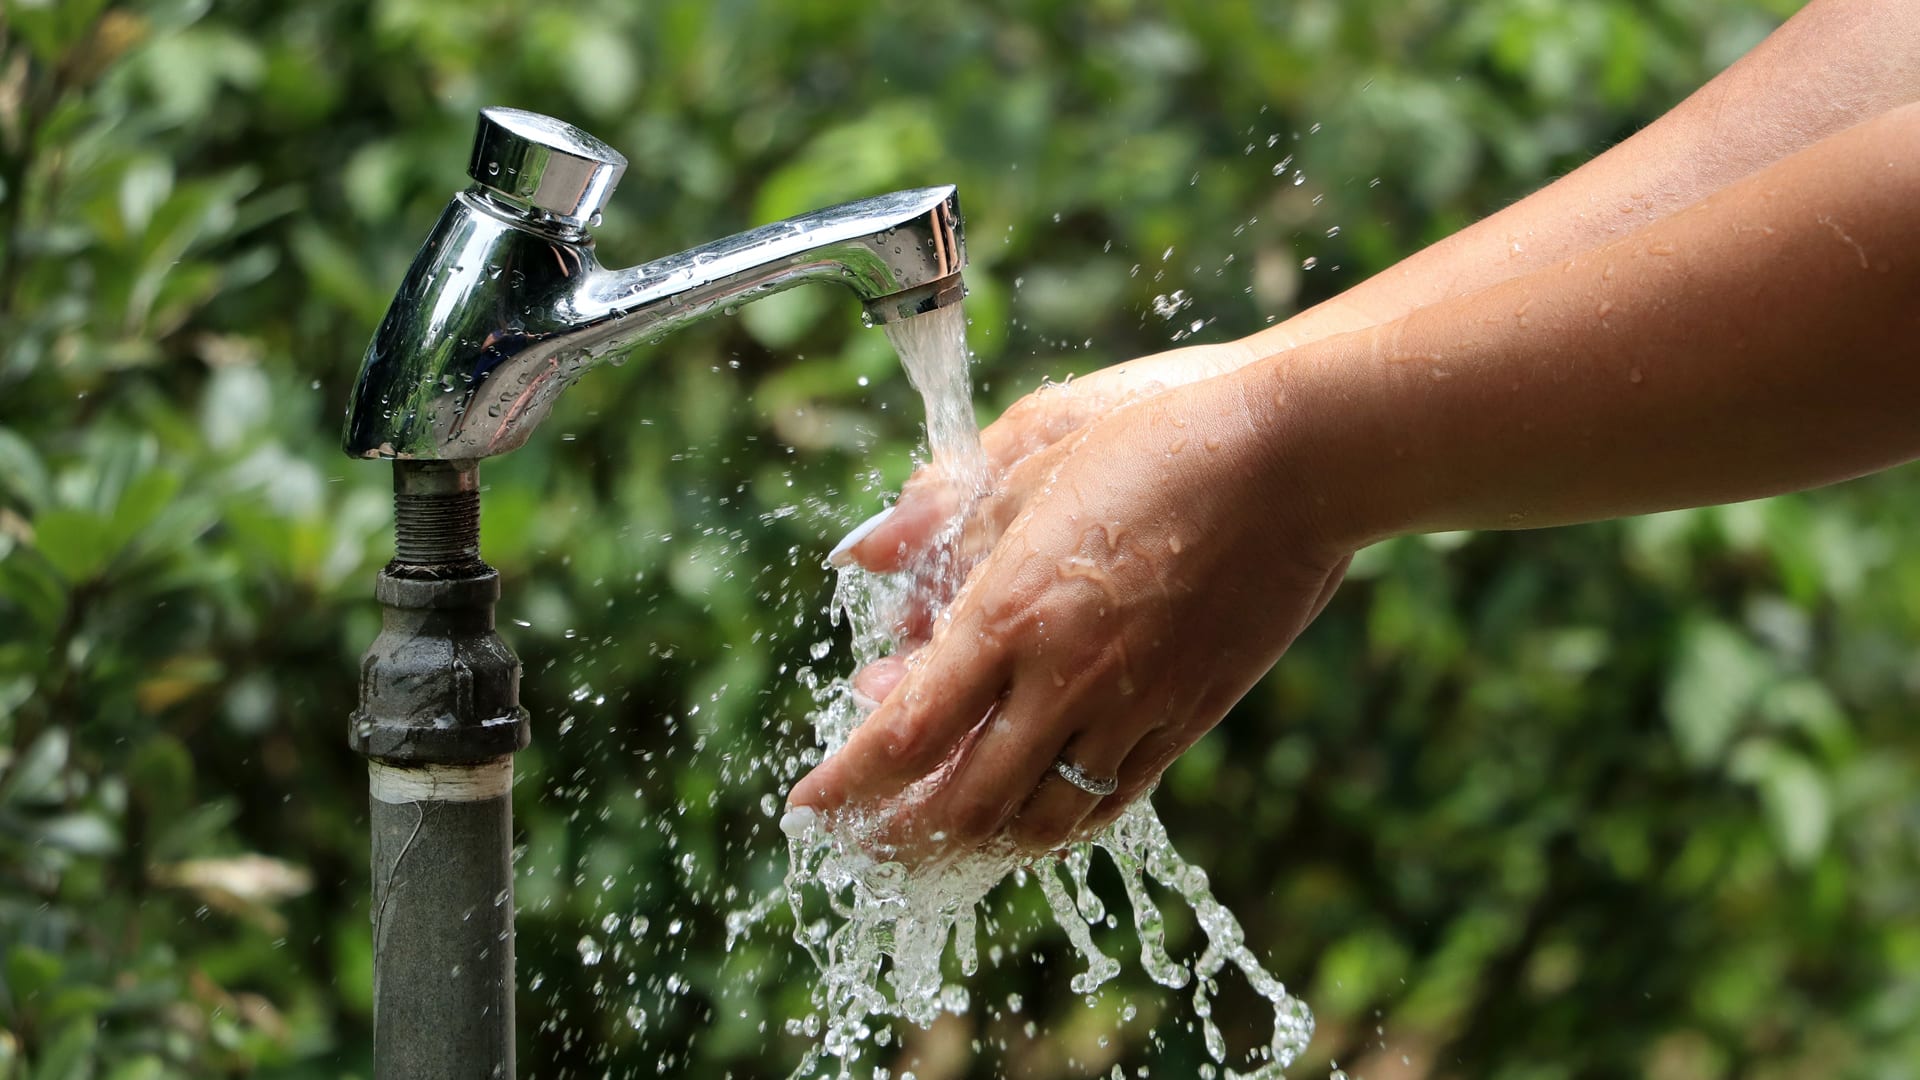 Plumbing Fixtures for Water Heater Services - Best Plumbing for Nashville, Franklin, & Murfreesboro locations | Green Group